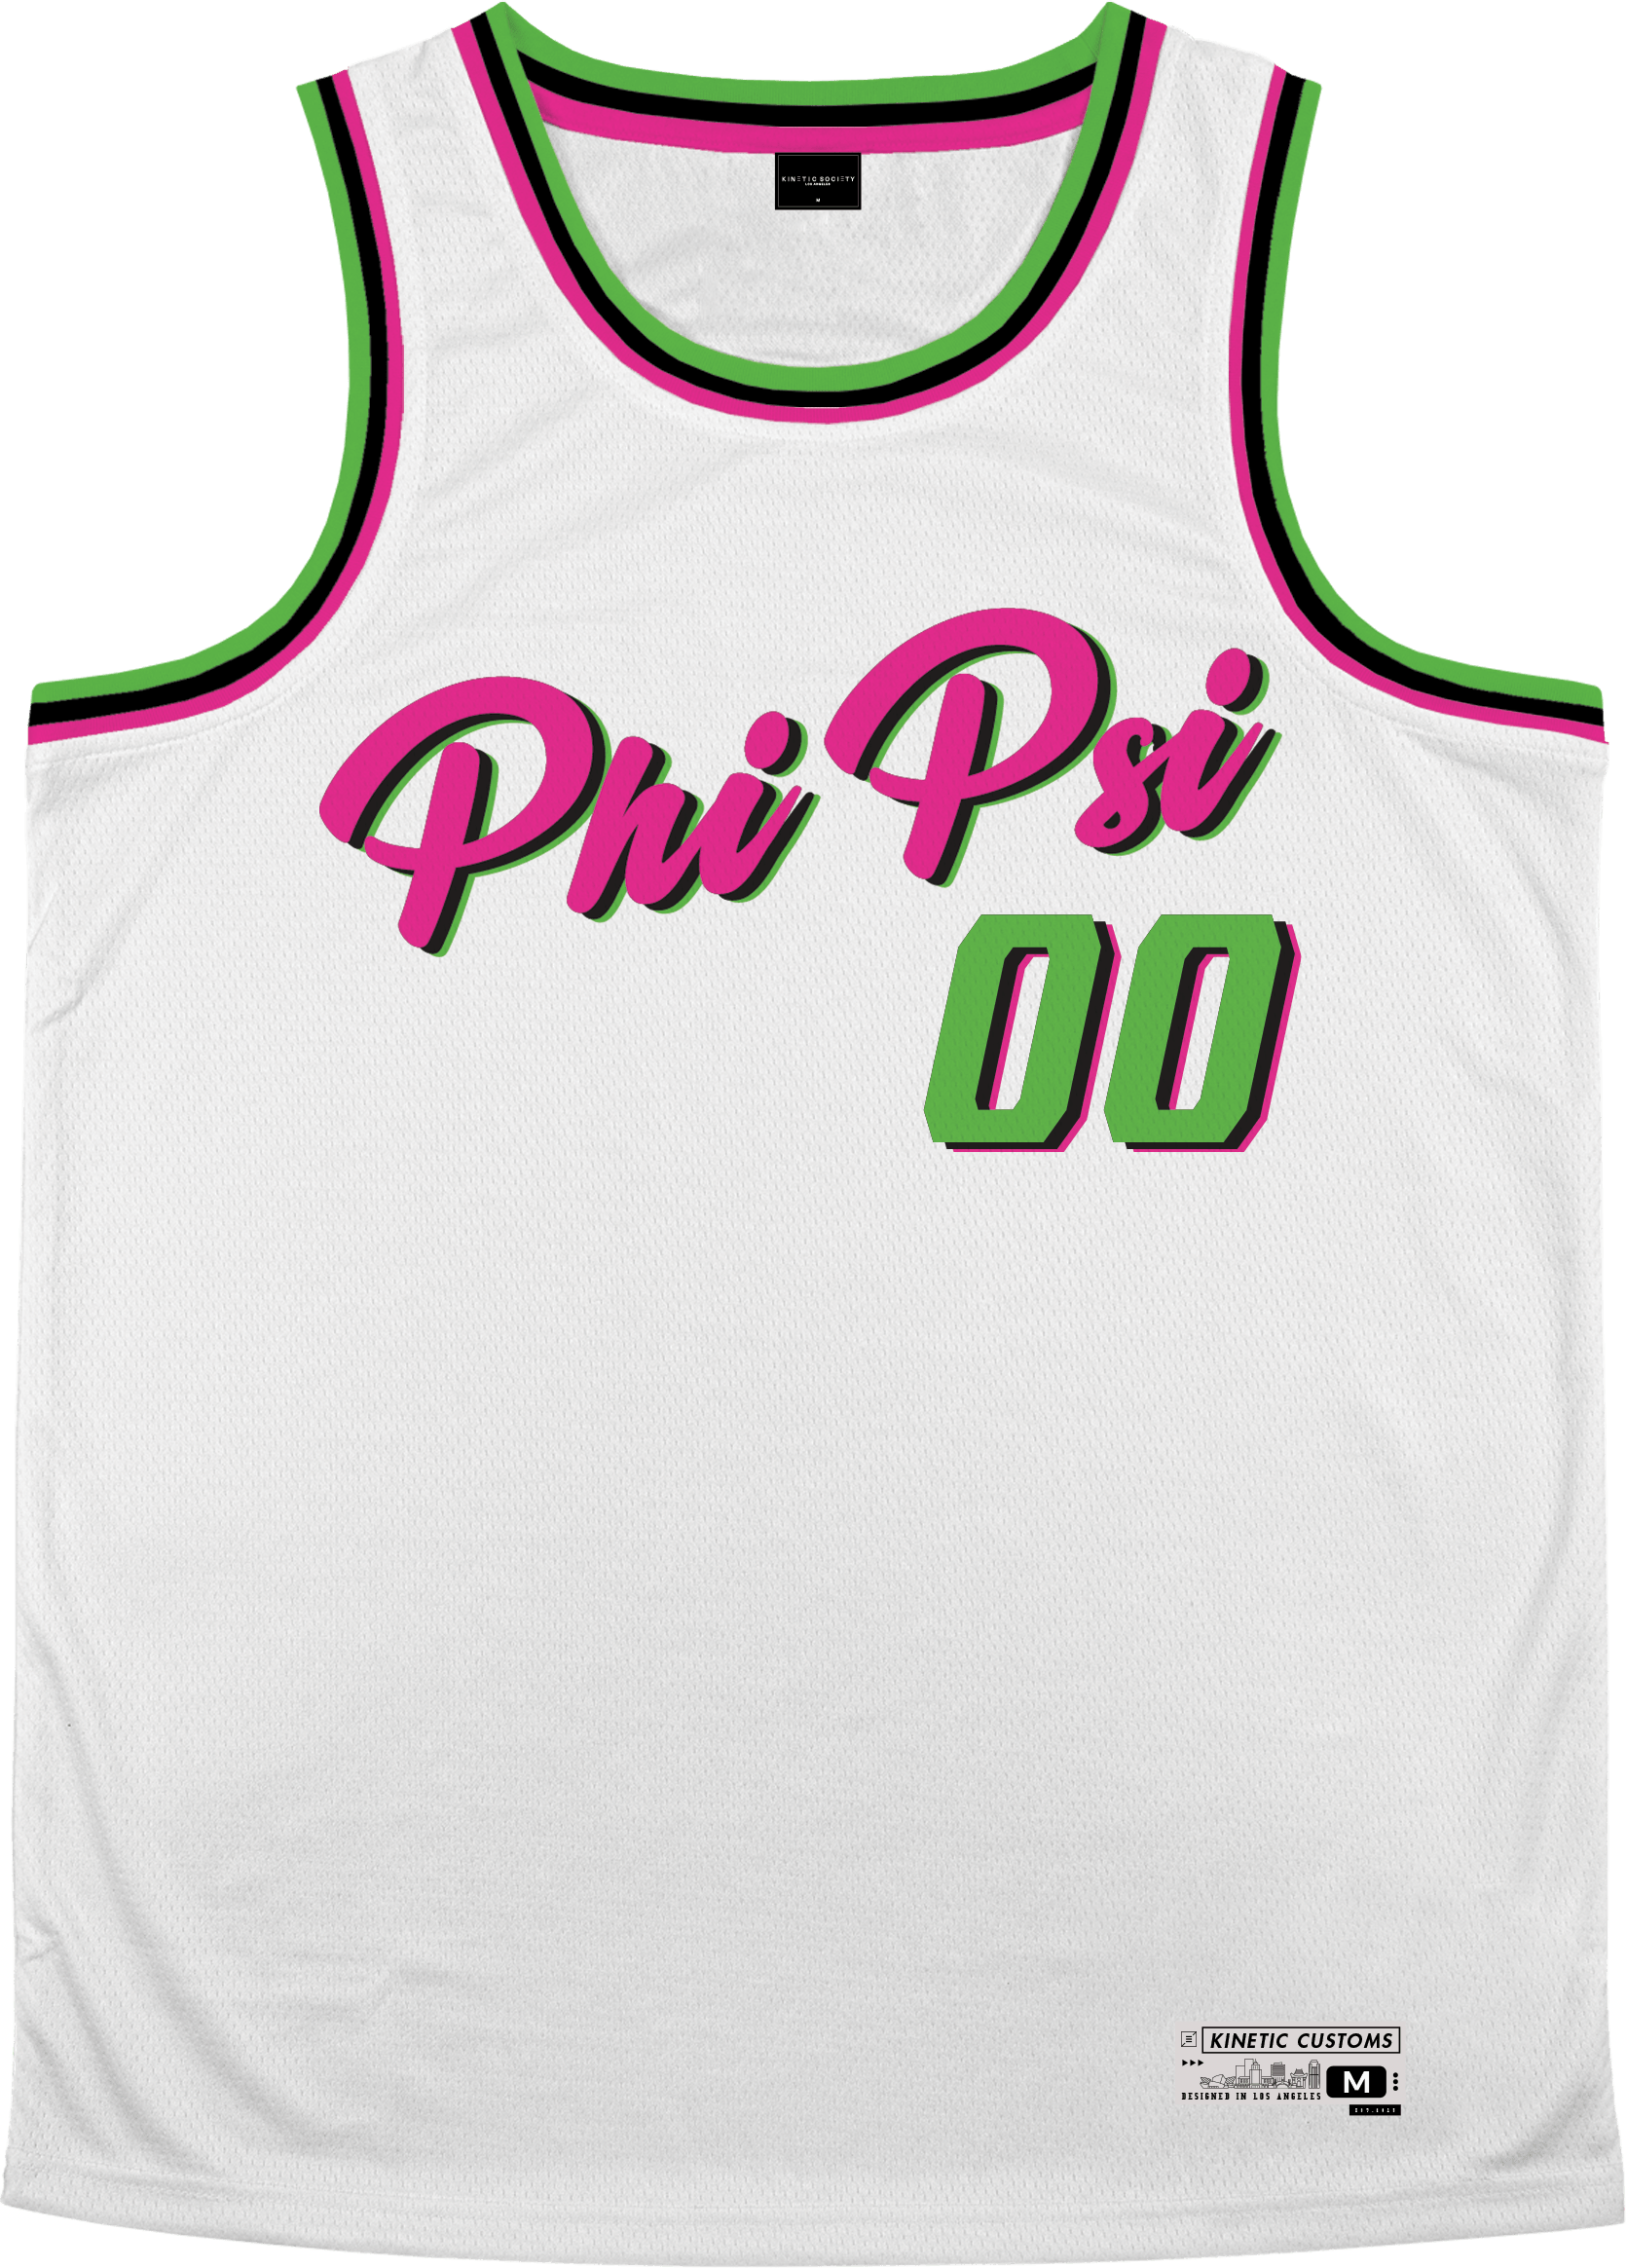 Phi Kappa Psi - Bubble Gum Basketball Jersey - Kinetic Society